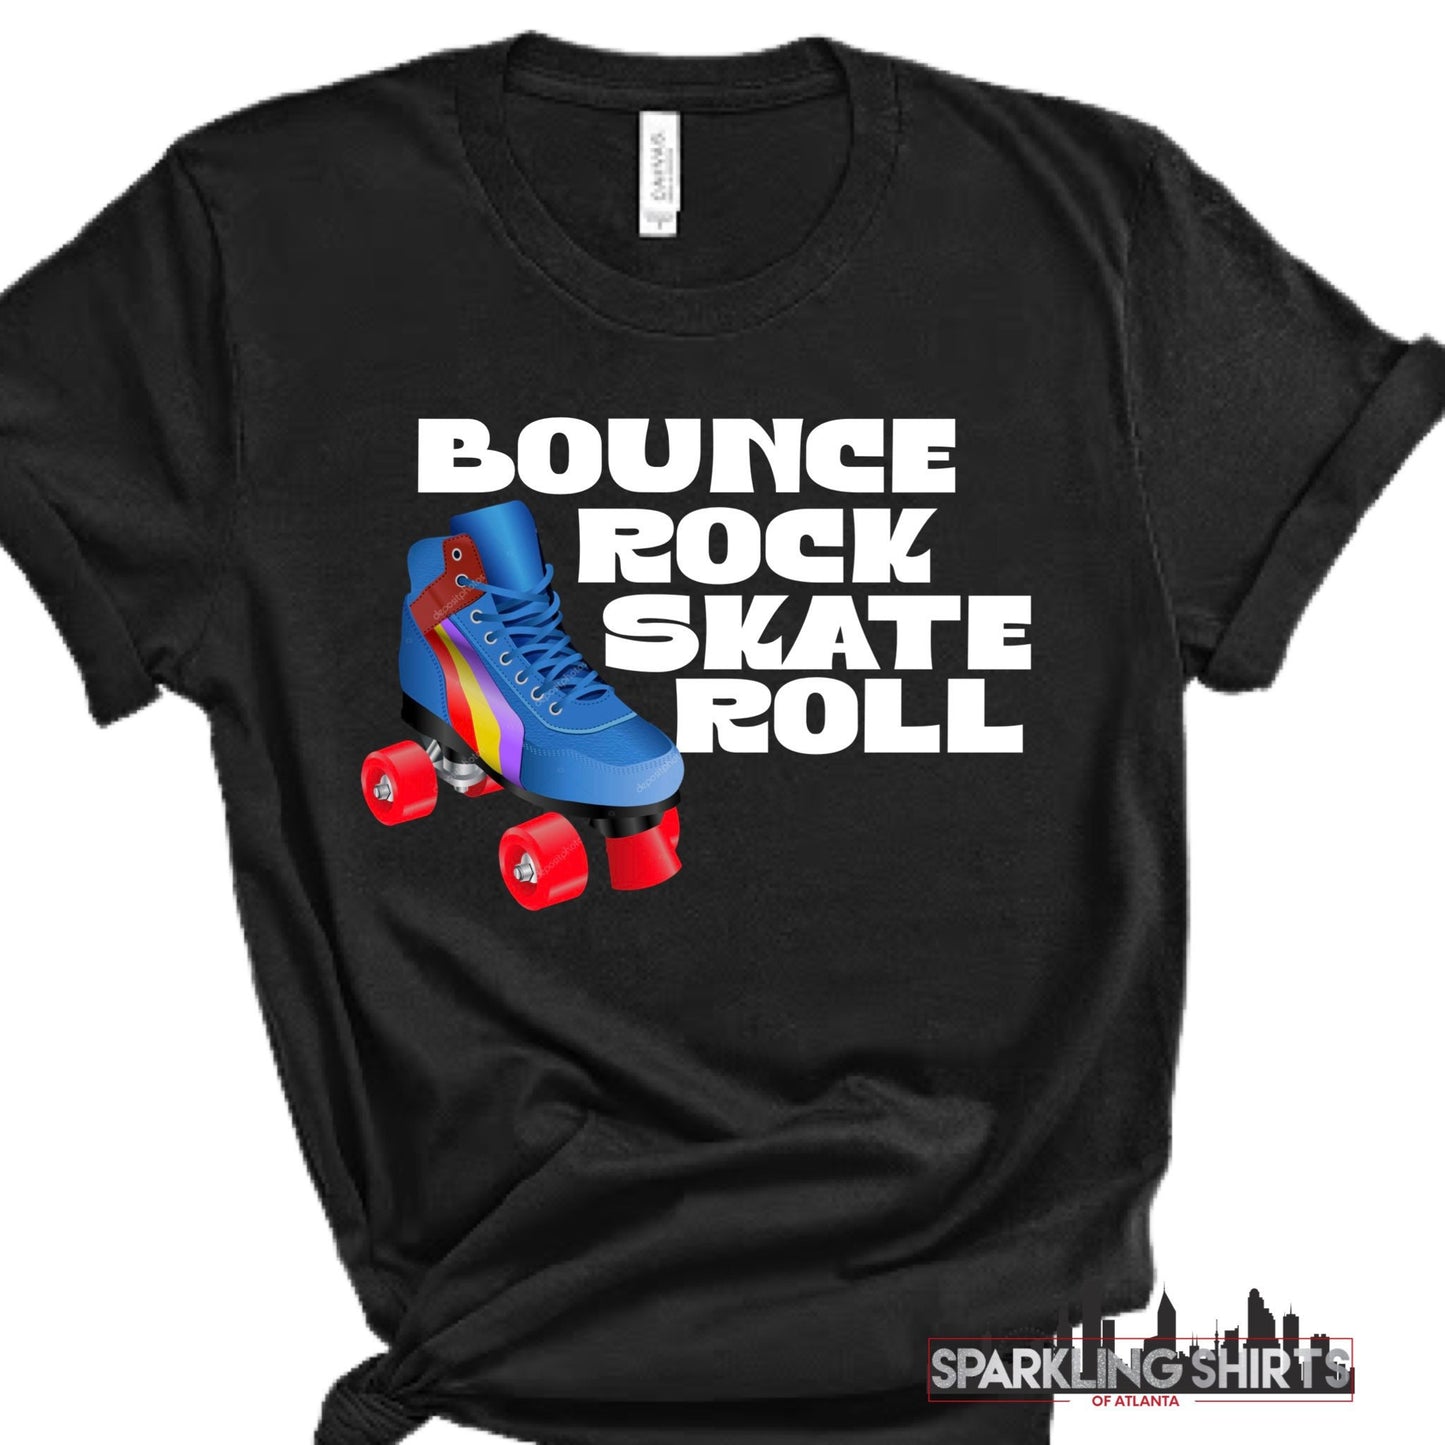 Bounce Rock Skate Roll| Fun| Family| Skating|Funny| Fun T-shirts| Graphic T-shirt